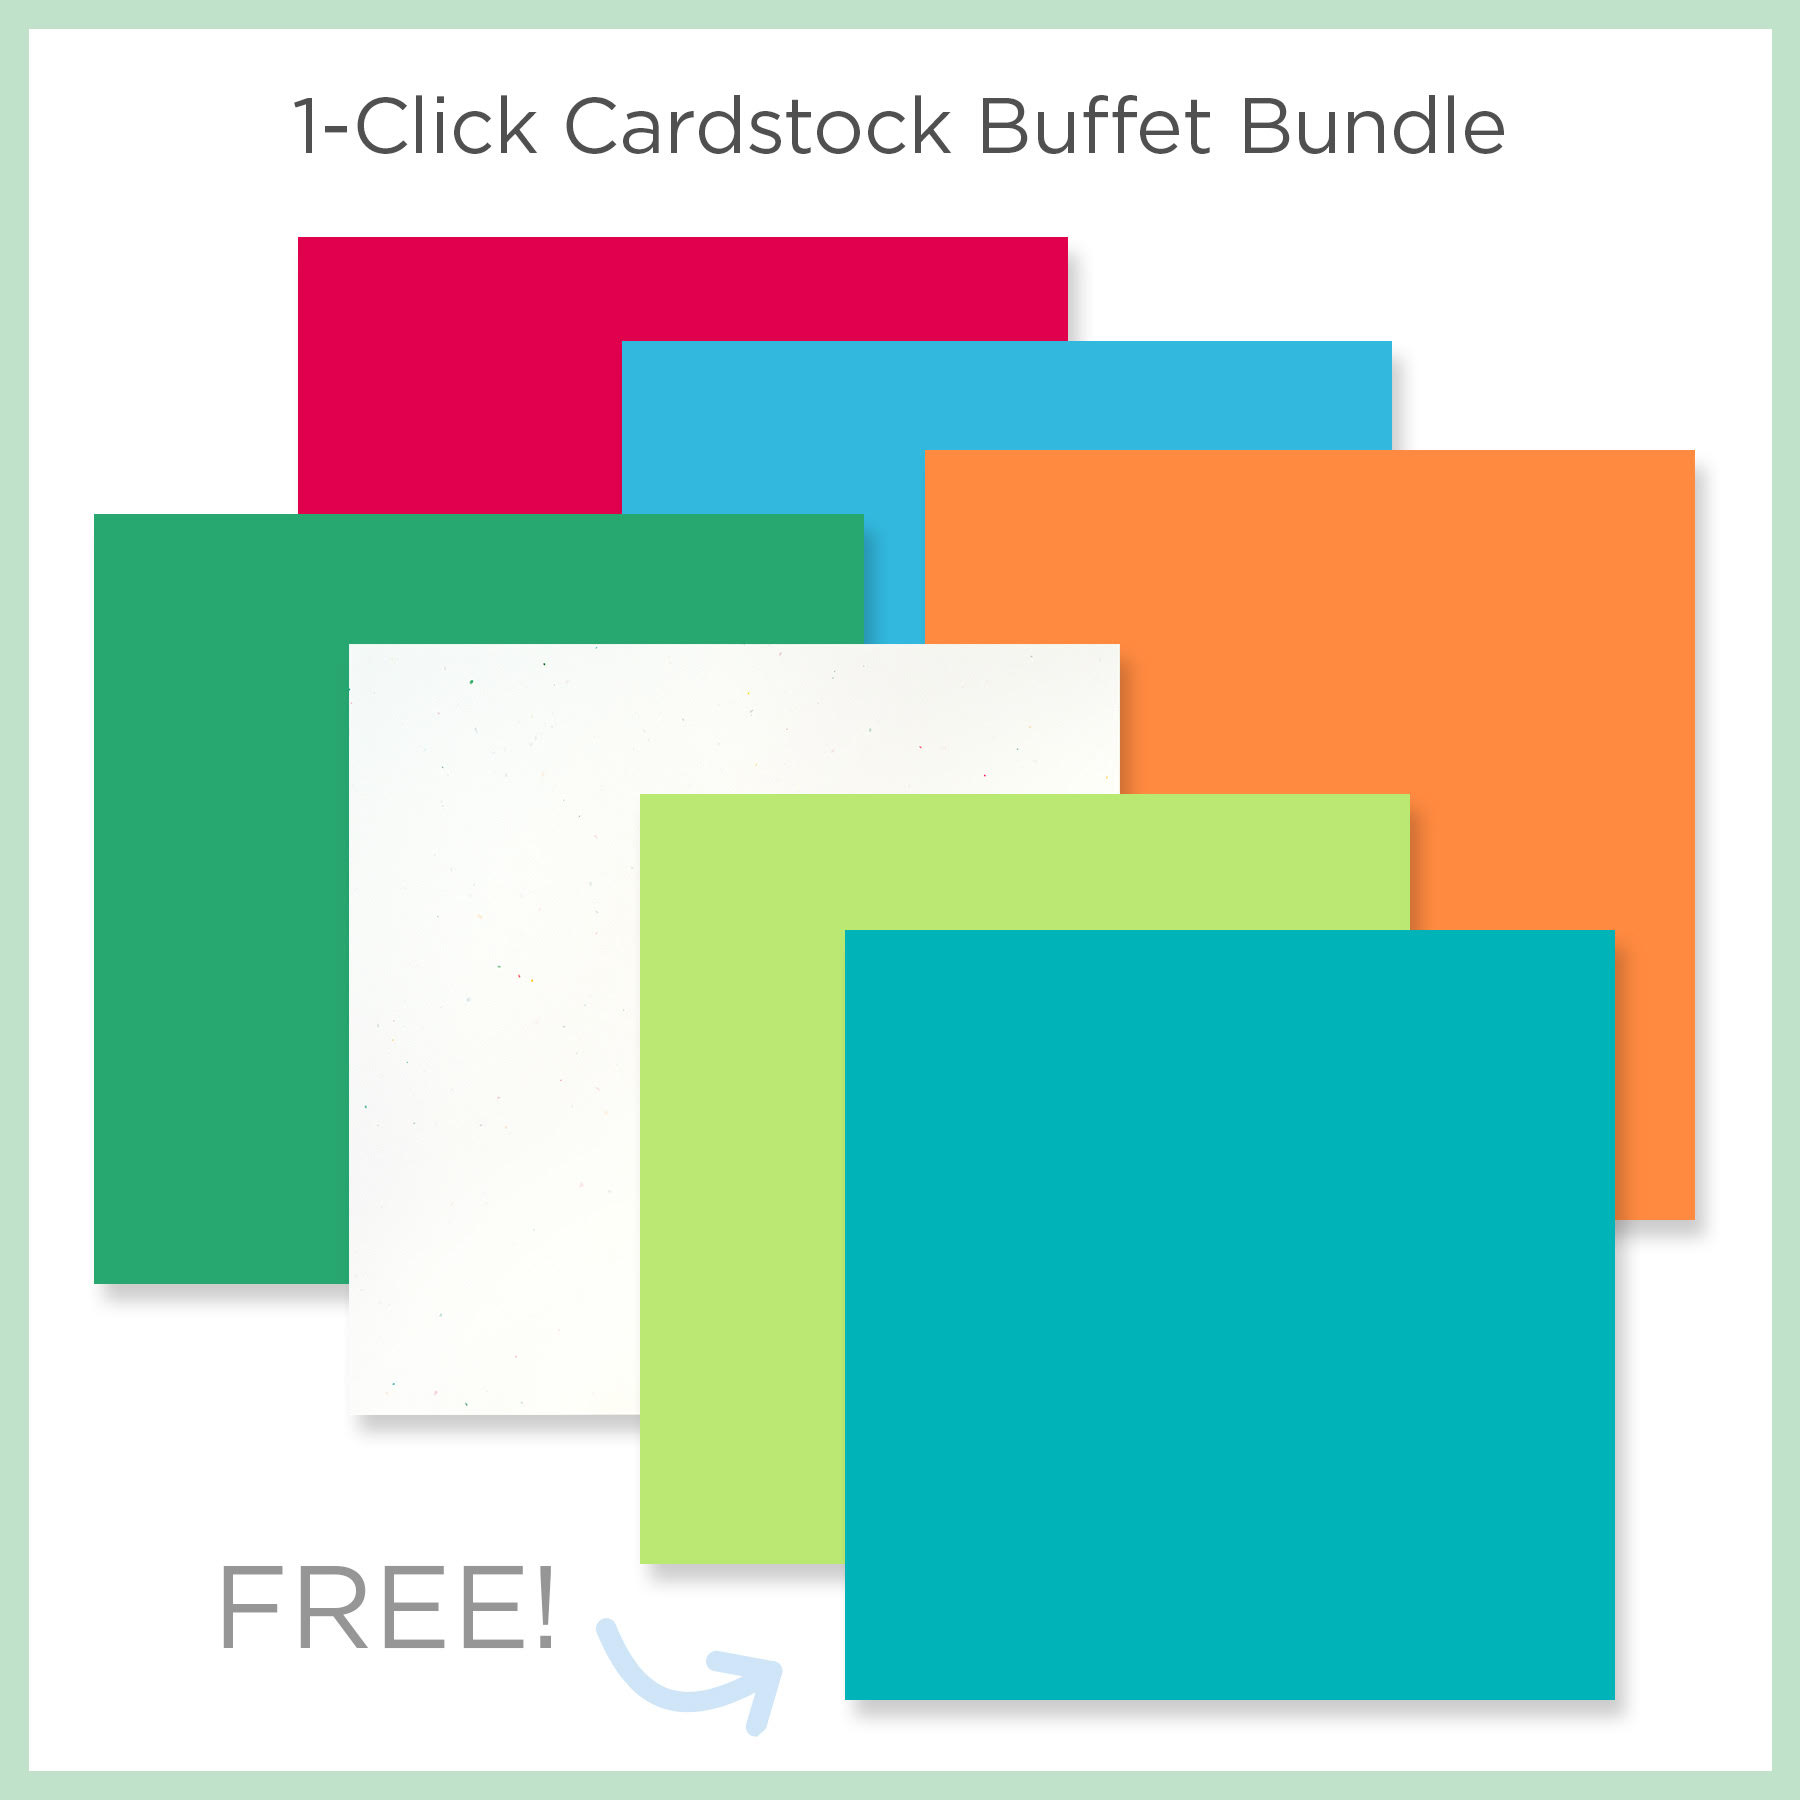 1-click cardstock buffet bundle